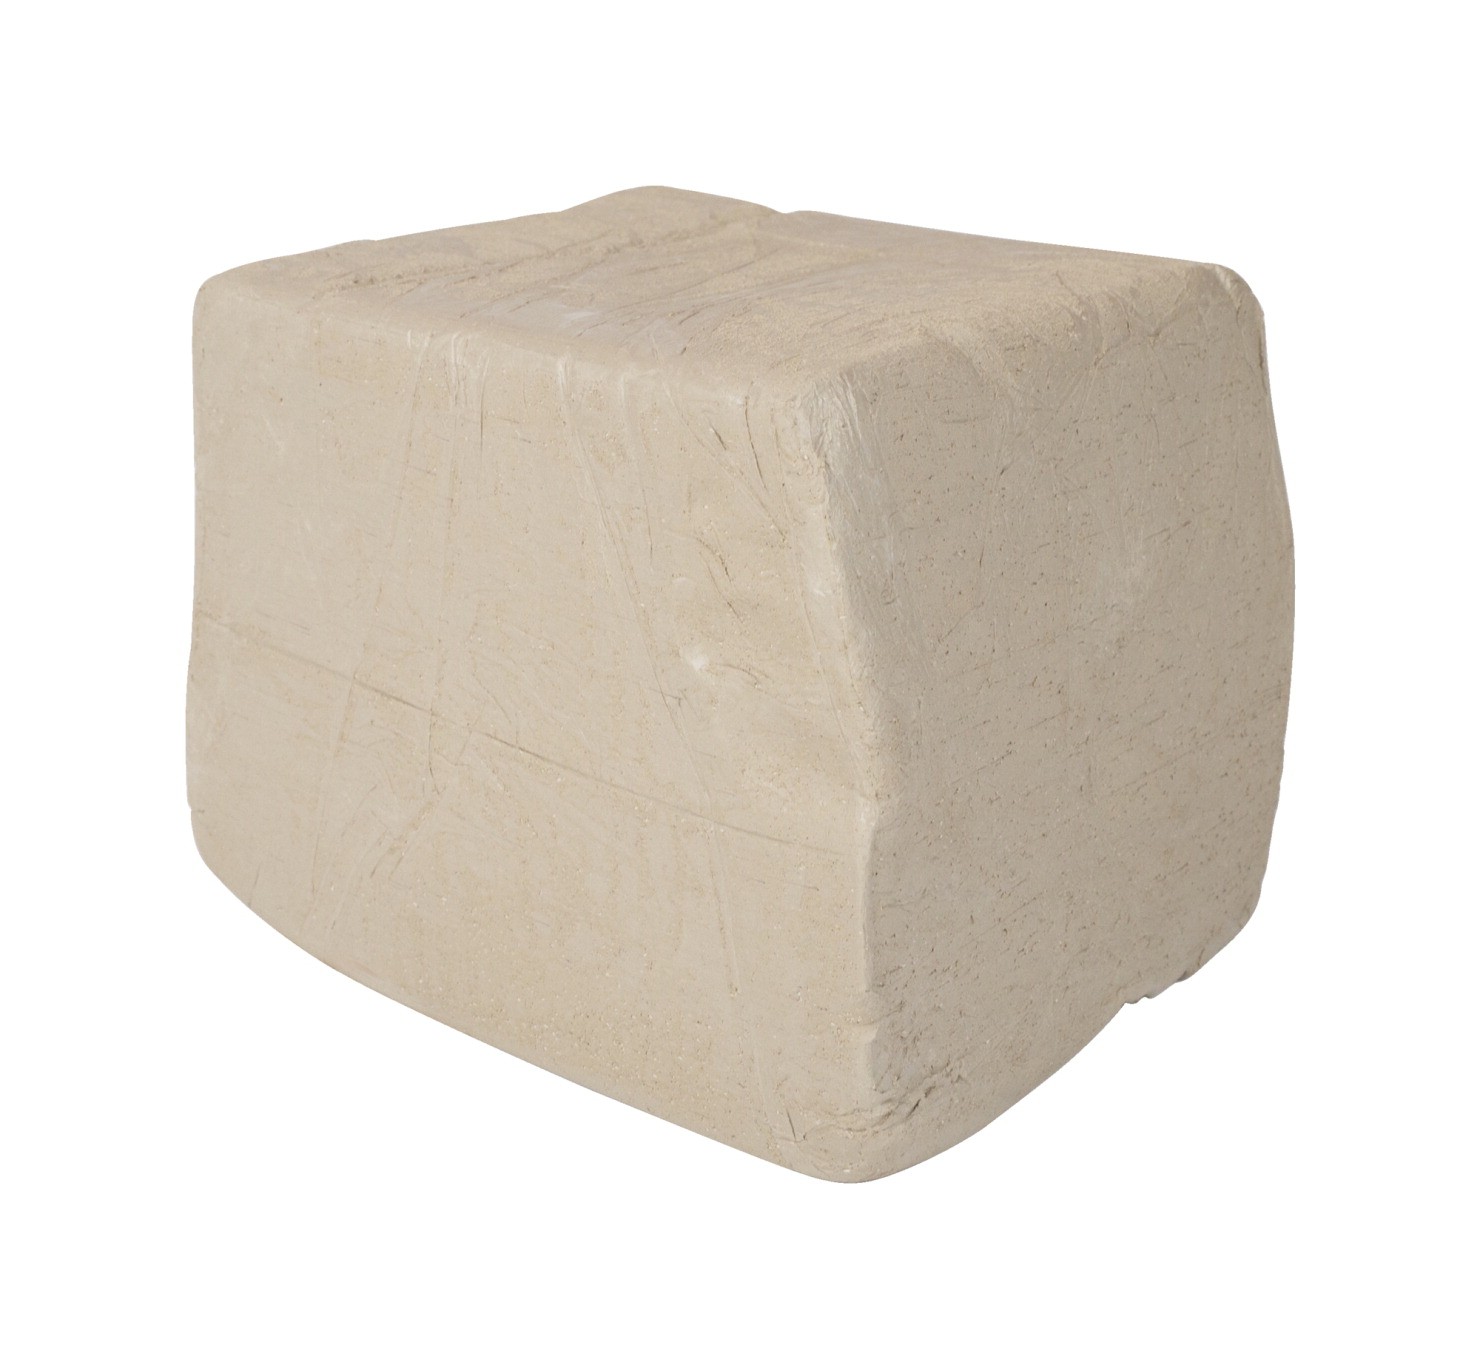 Amaco White Sculpture Clay, Cones 05-6 #27-M, 25 lb Bag - 2/Box (50 Lbs)